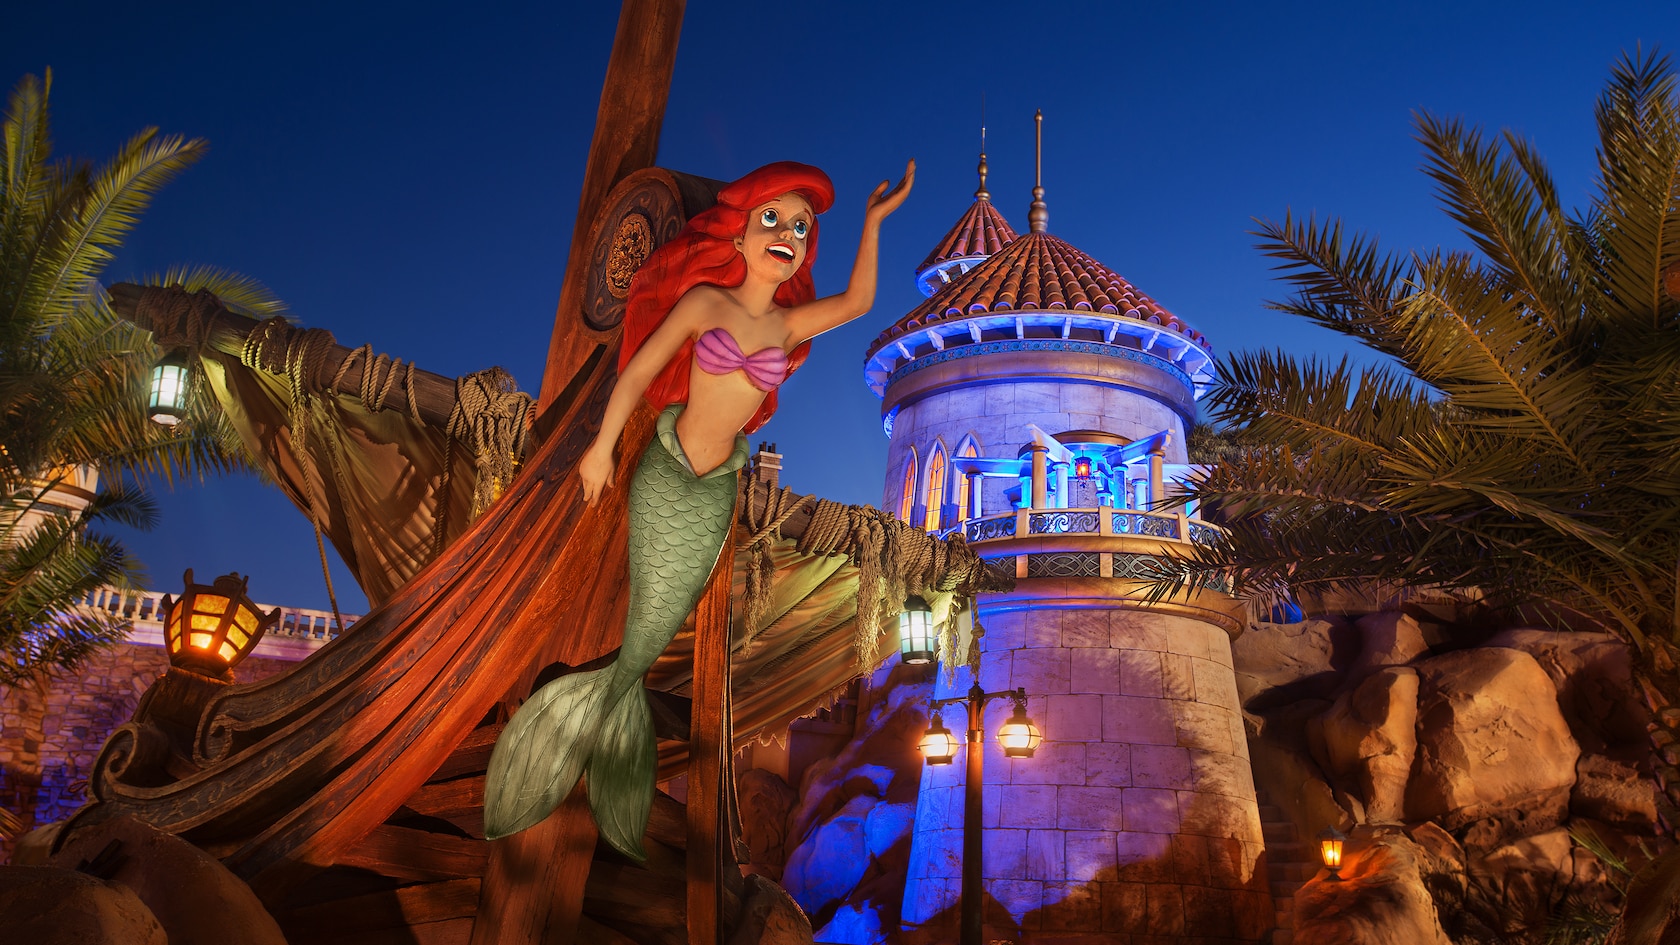 Under The Sea Journey Of The Little Mermaid Magic Kingdom Attractions Walt Disney World Resort